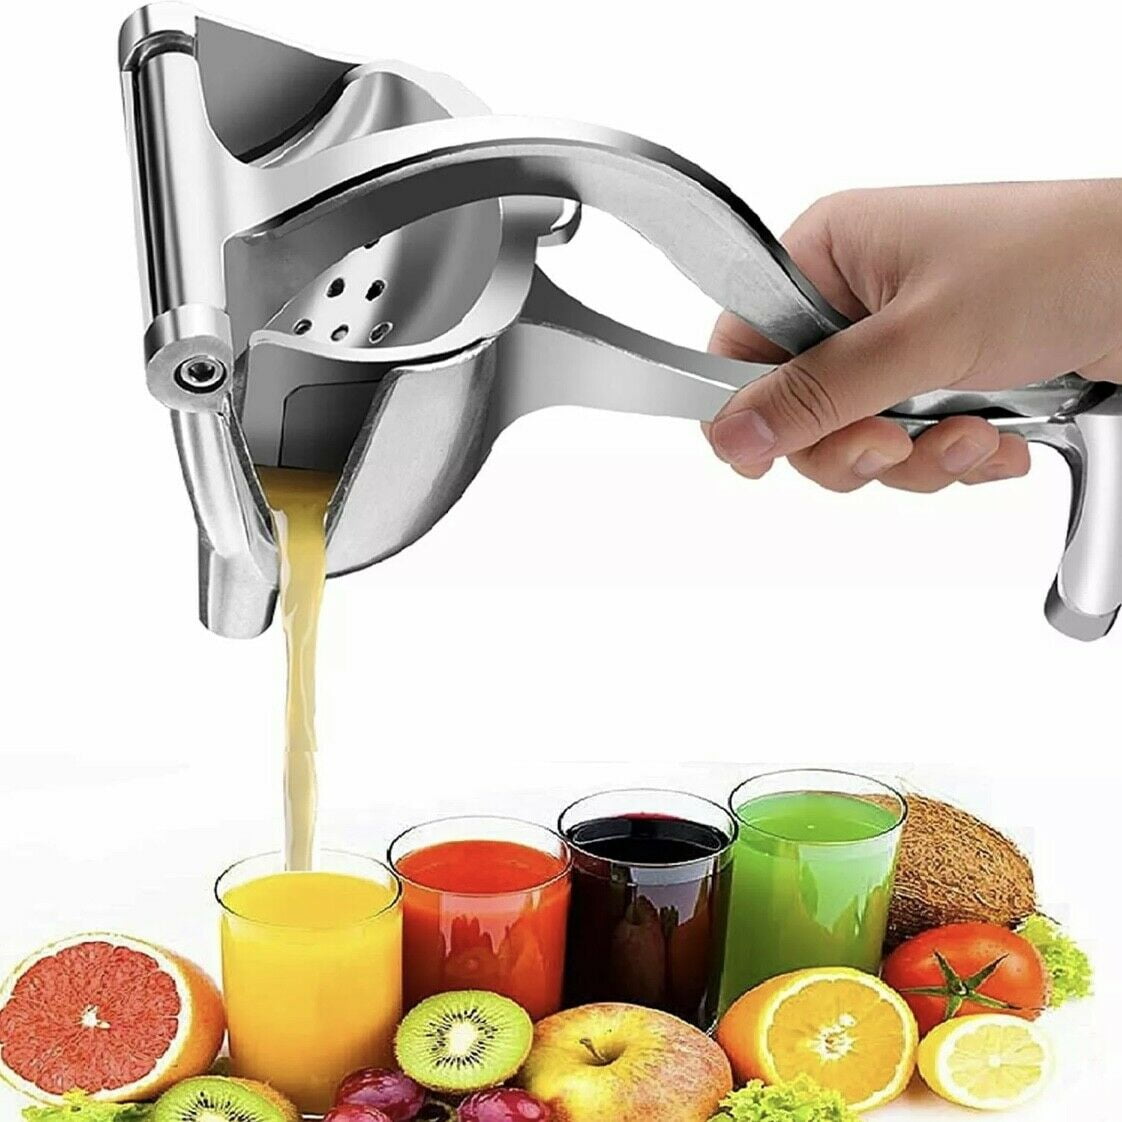 Fruit Juice Squeezer Lemon Orange Juicer Kitchen Manual Hand Press Tool Home